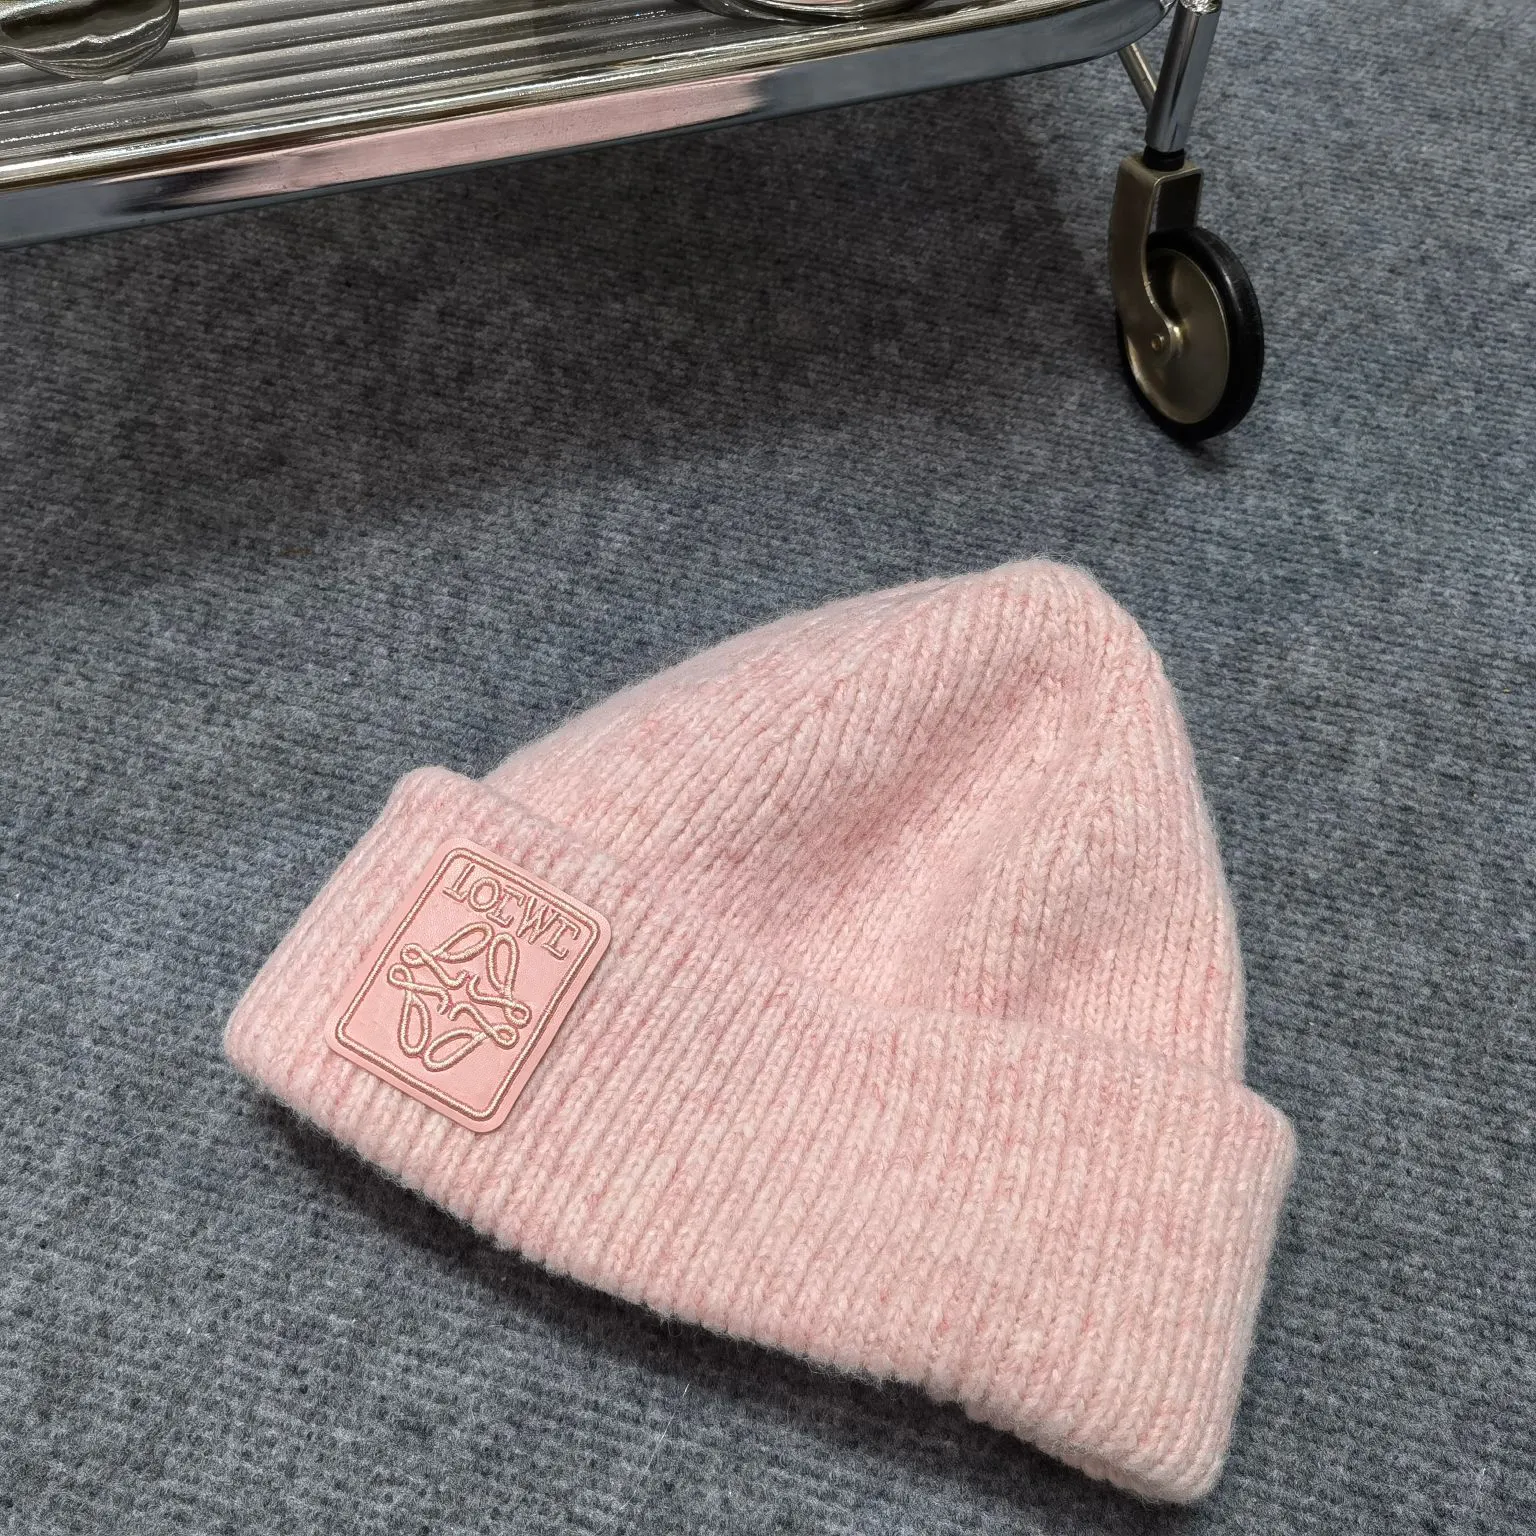 Lowewe Designer Beanie Hat Top Quality Knitted Hat Beanie Cap Men